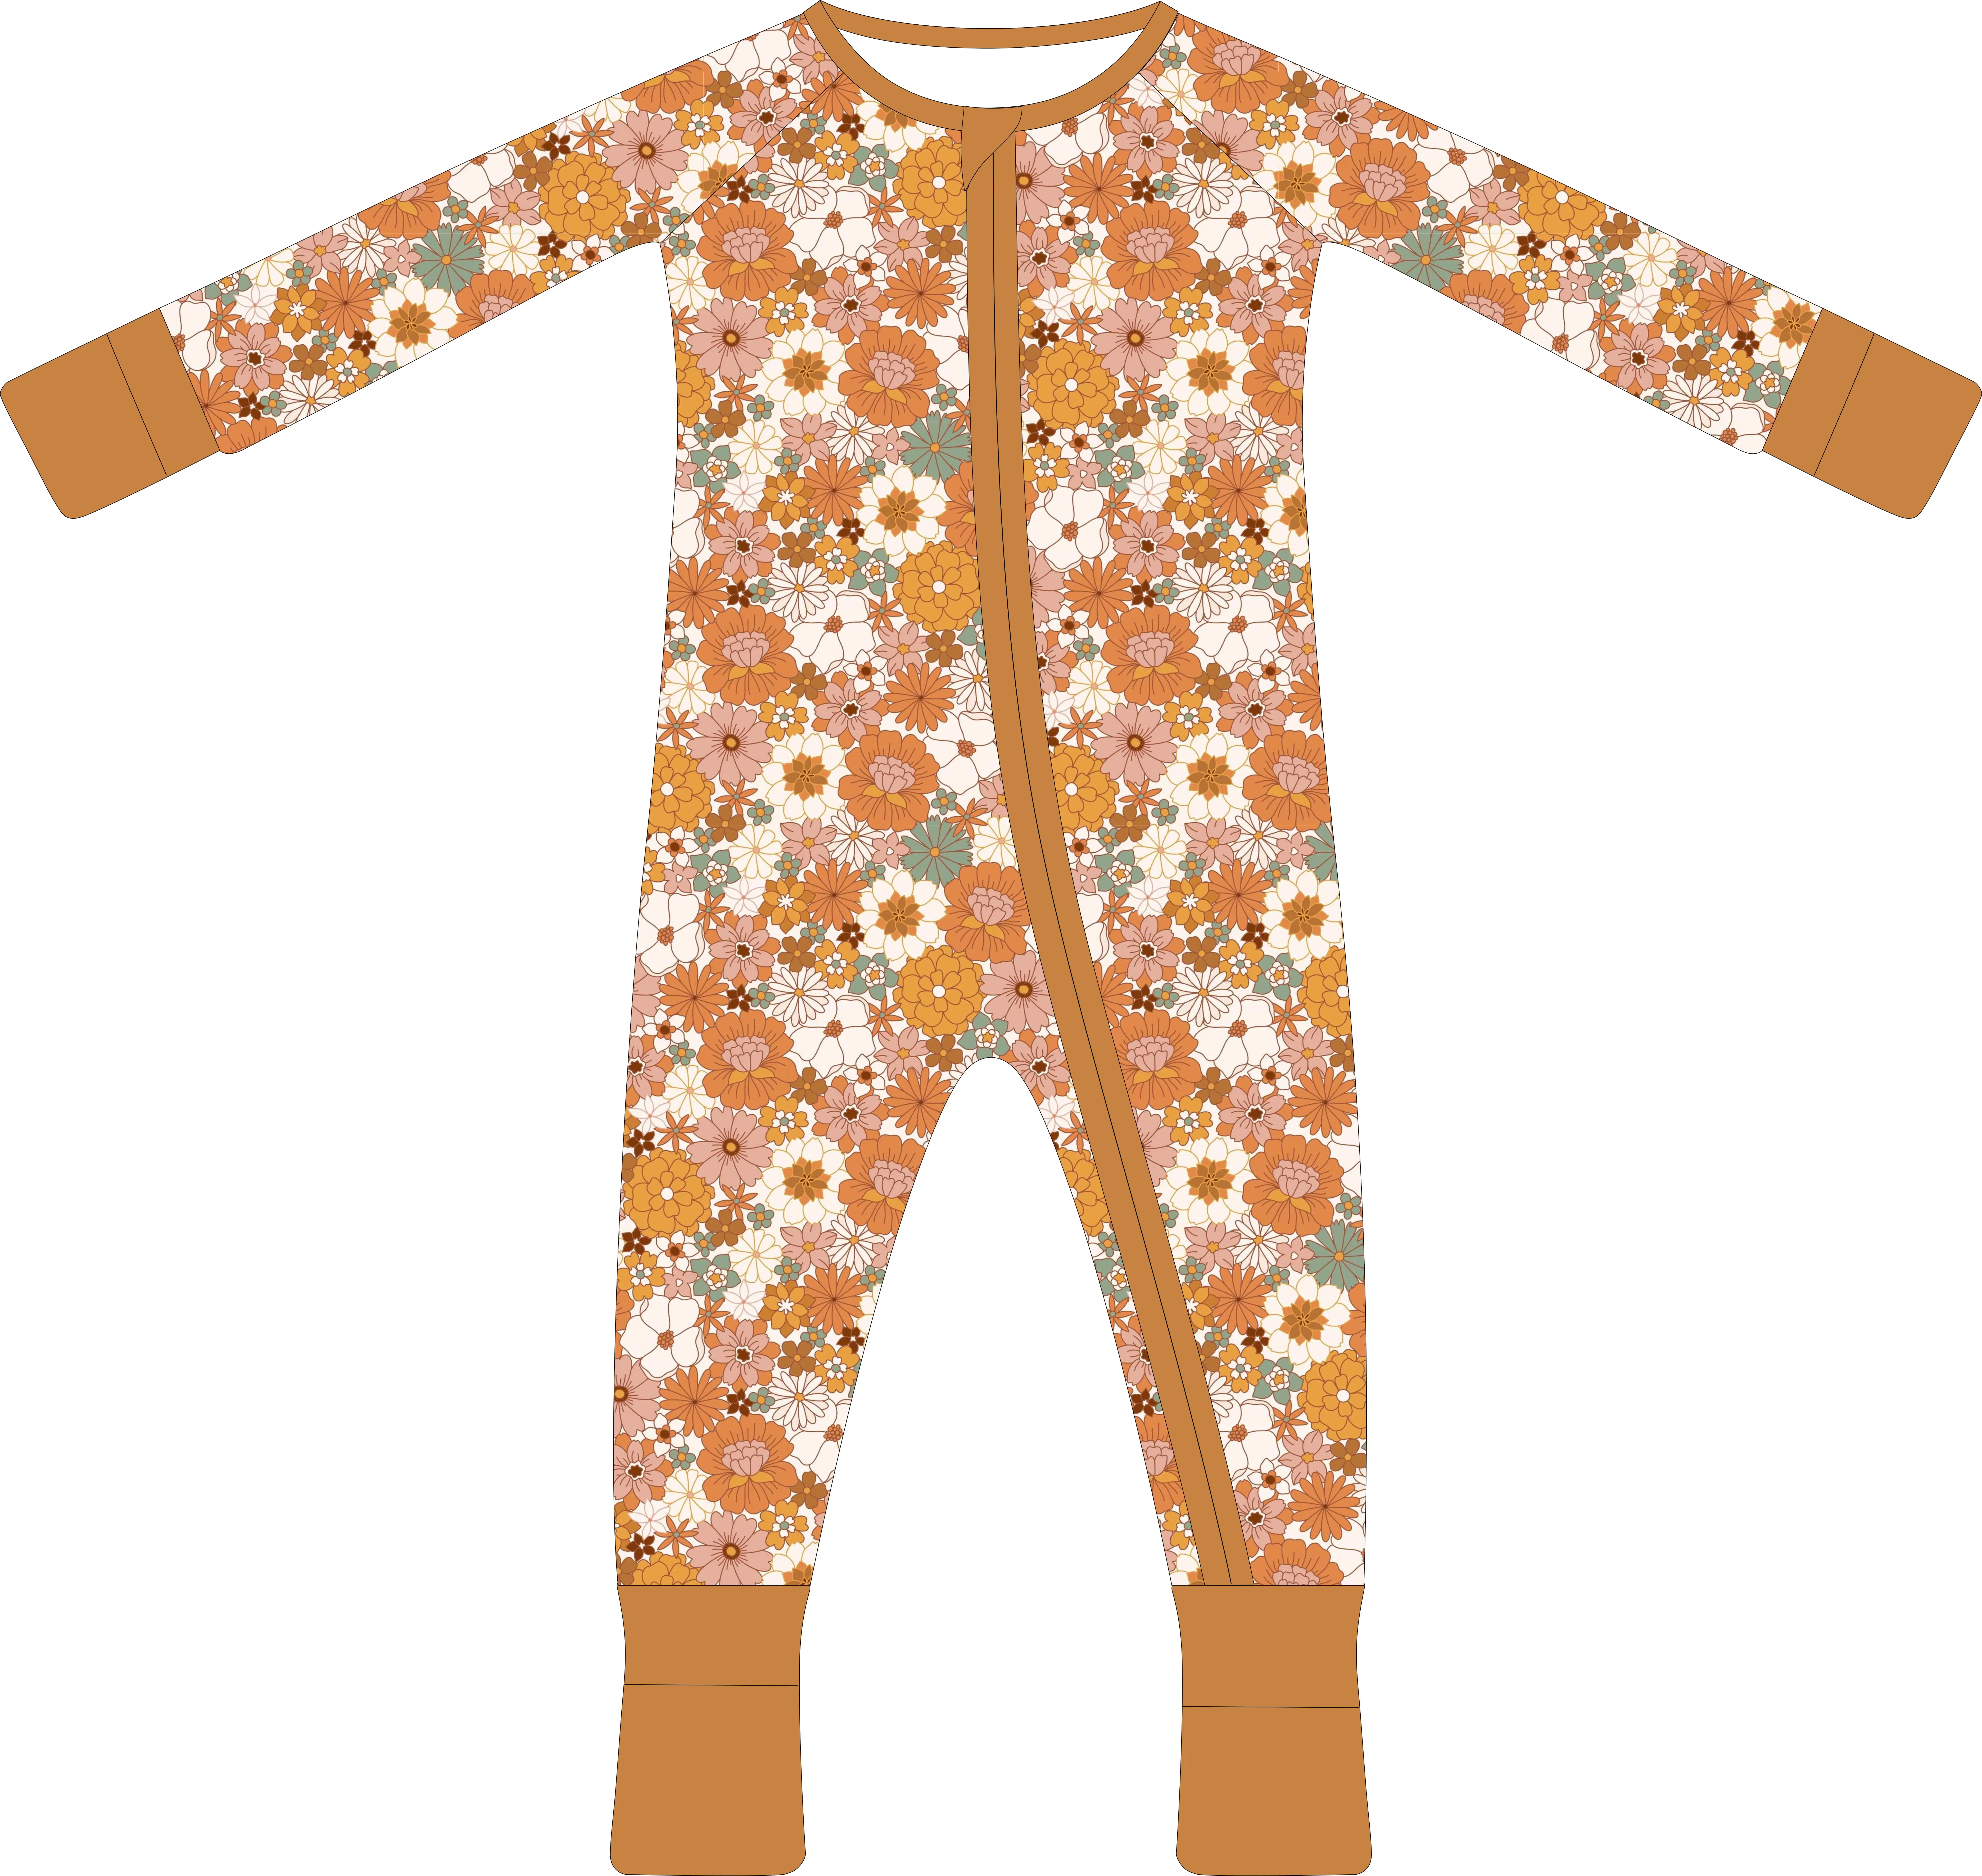 Kustom cetak 95% Organik Bayi Balita Romper Onesie spandeks 5% bambu baju tidur piyama anak balita pakaian untuk bayi